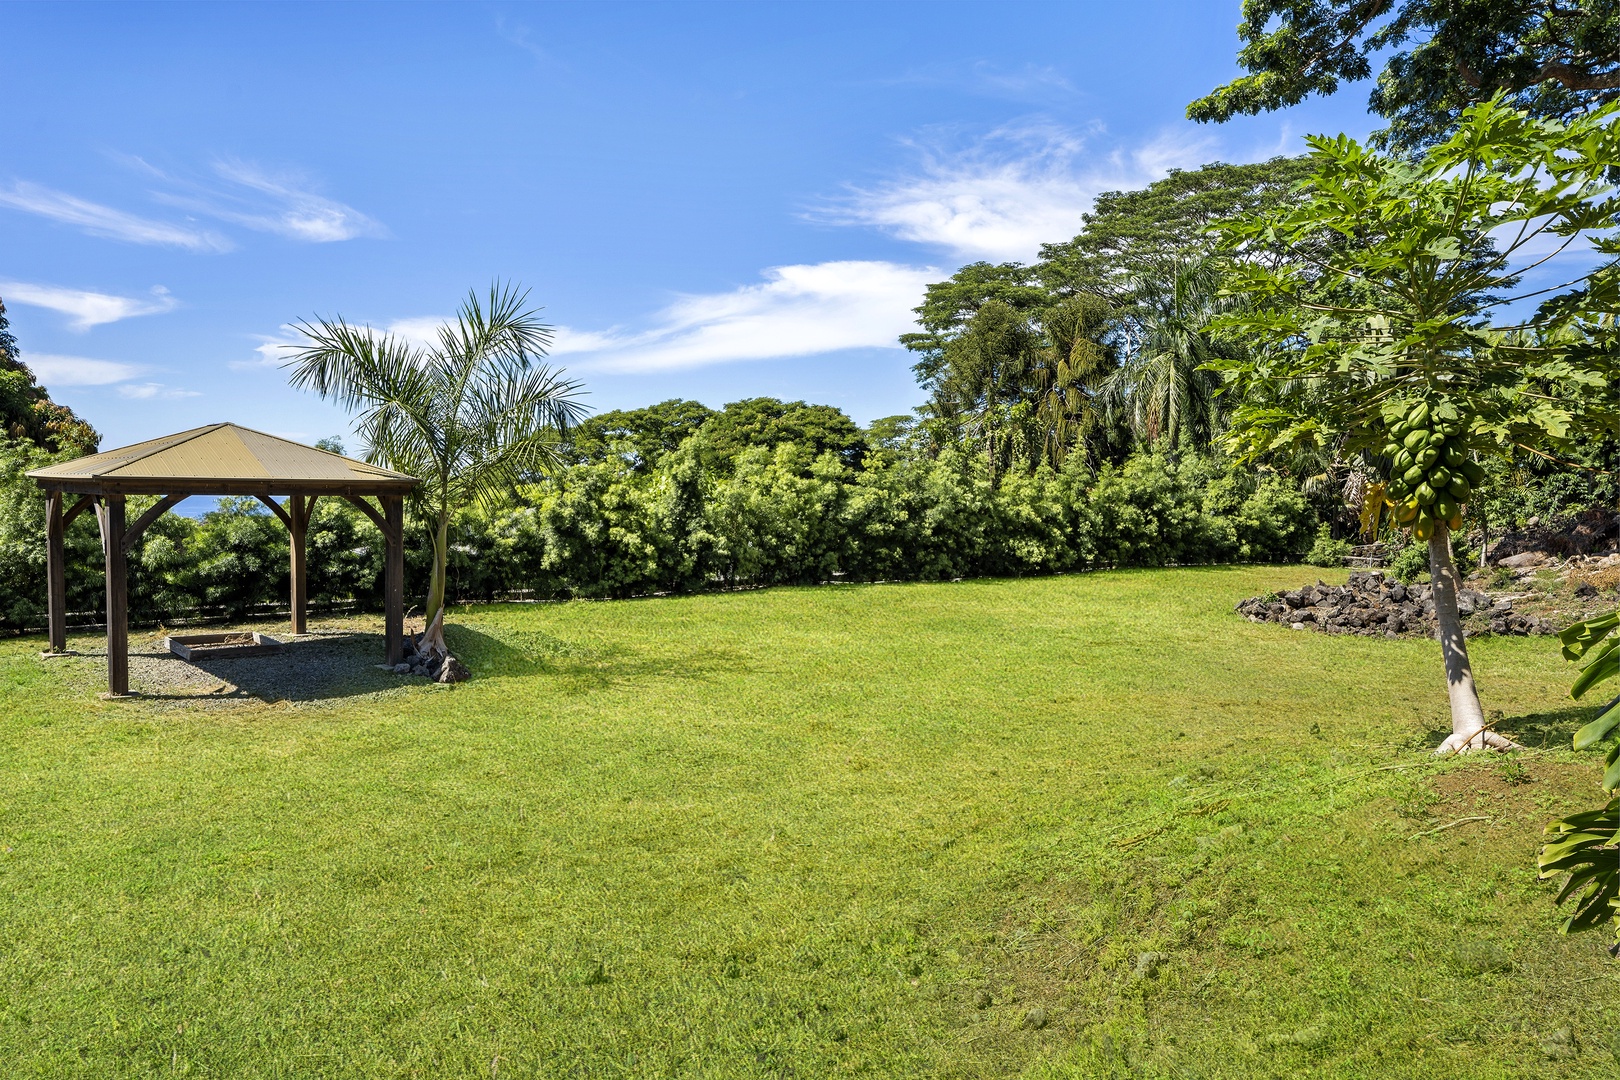 Kailua-Kona Vacation Rentals, Hale Joli - Lower Garden Overview